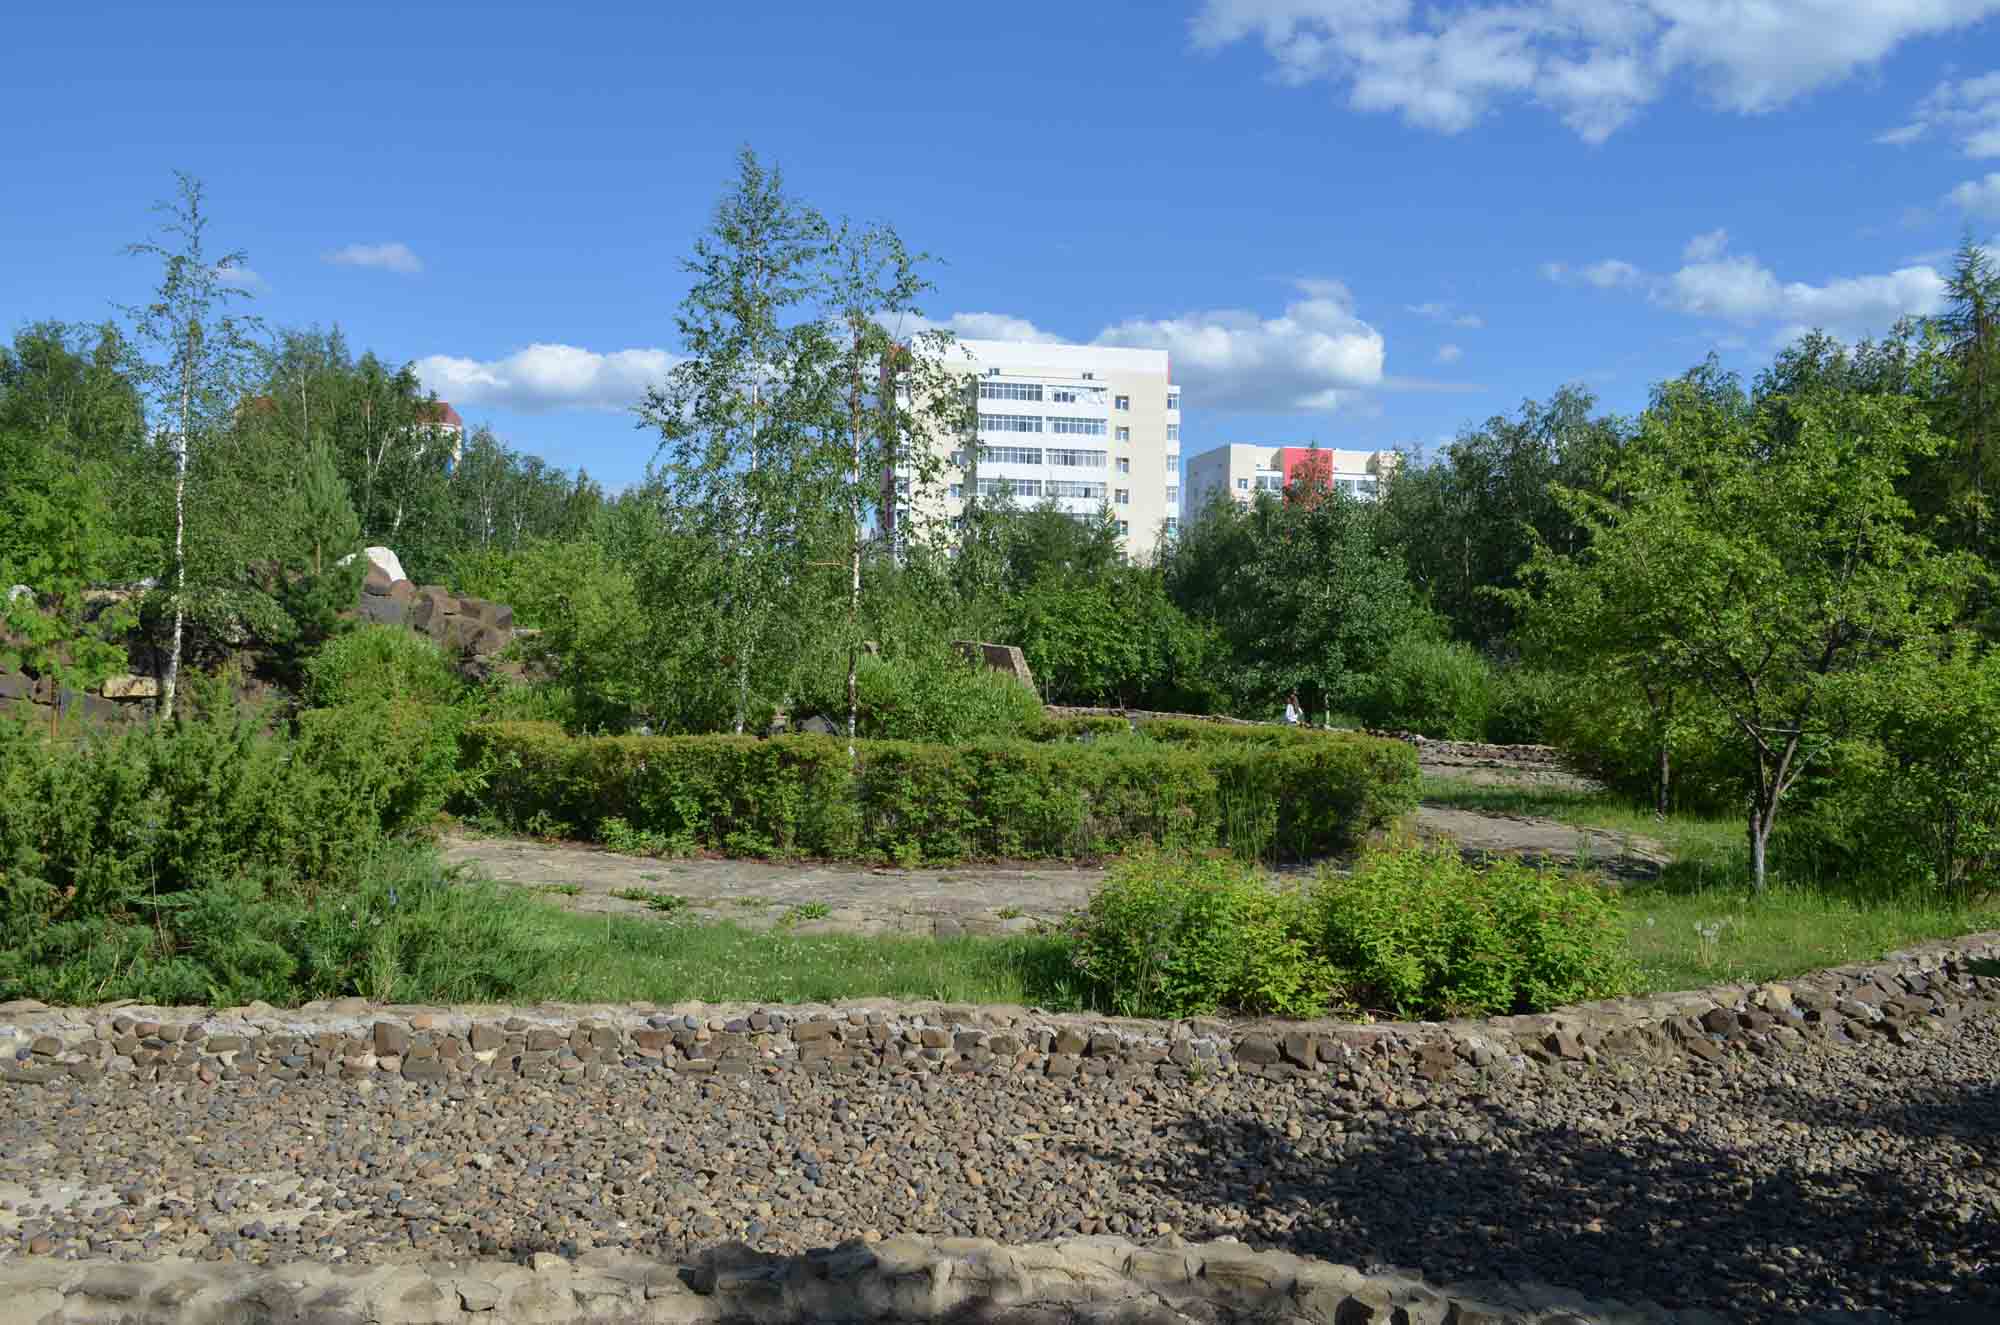 Ни в одном городе Якутии нет такого богатого сада посреди города